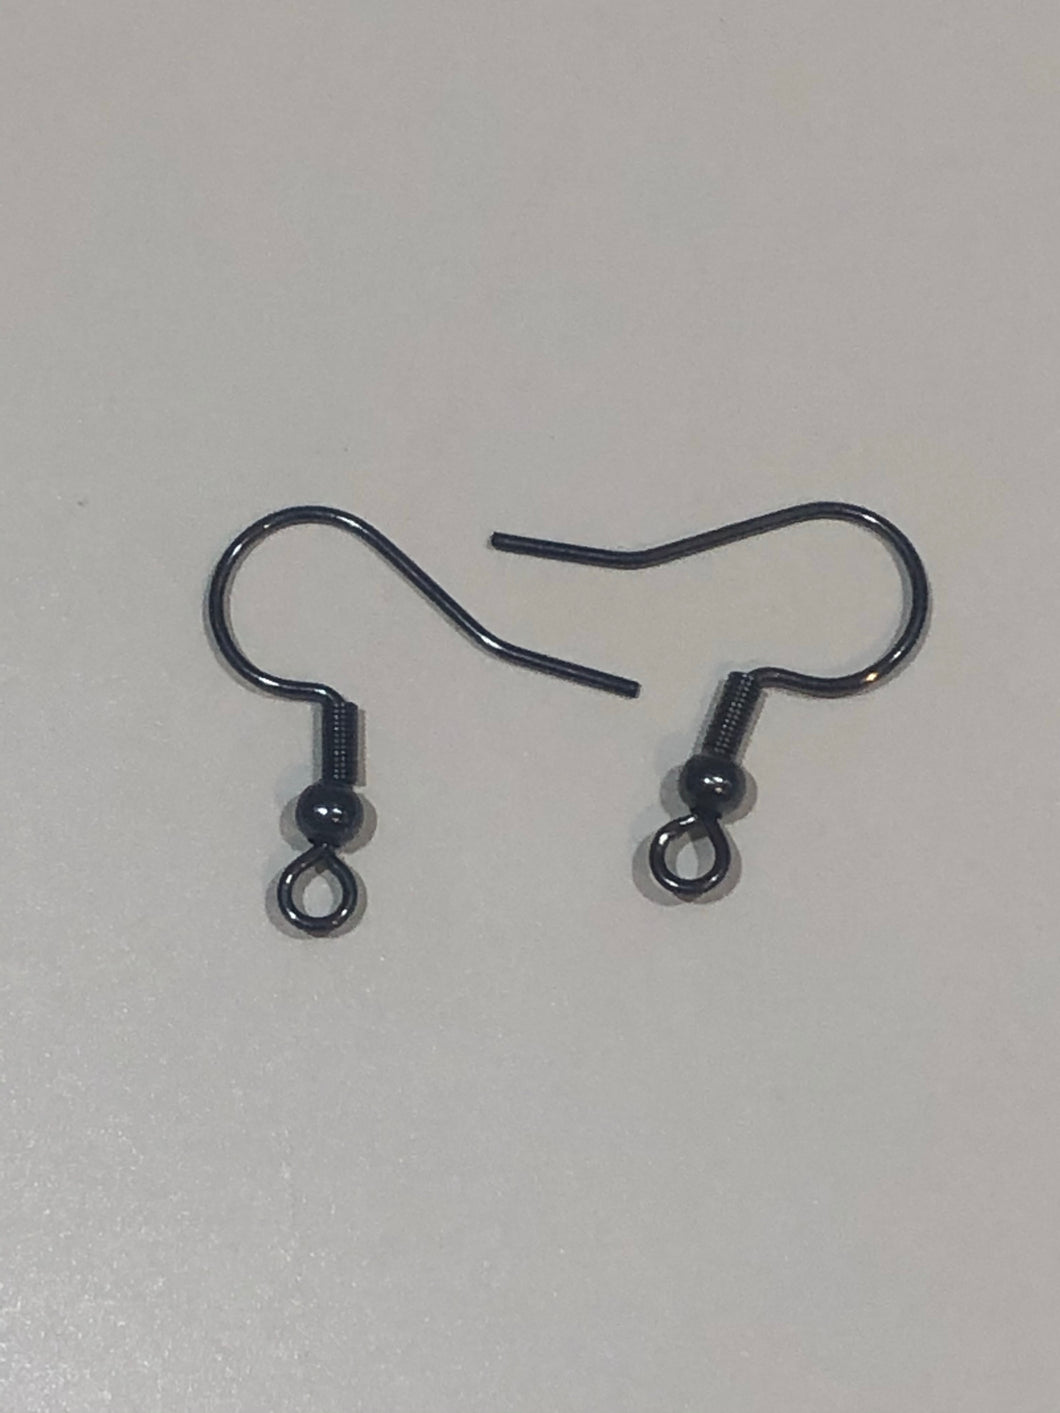 Hook earrings